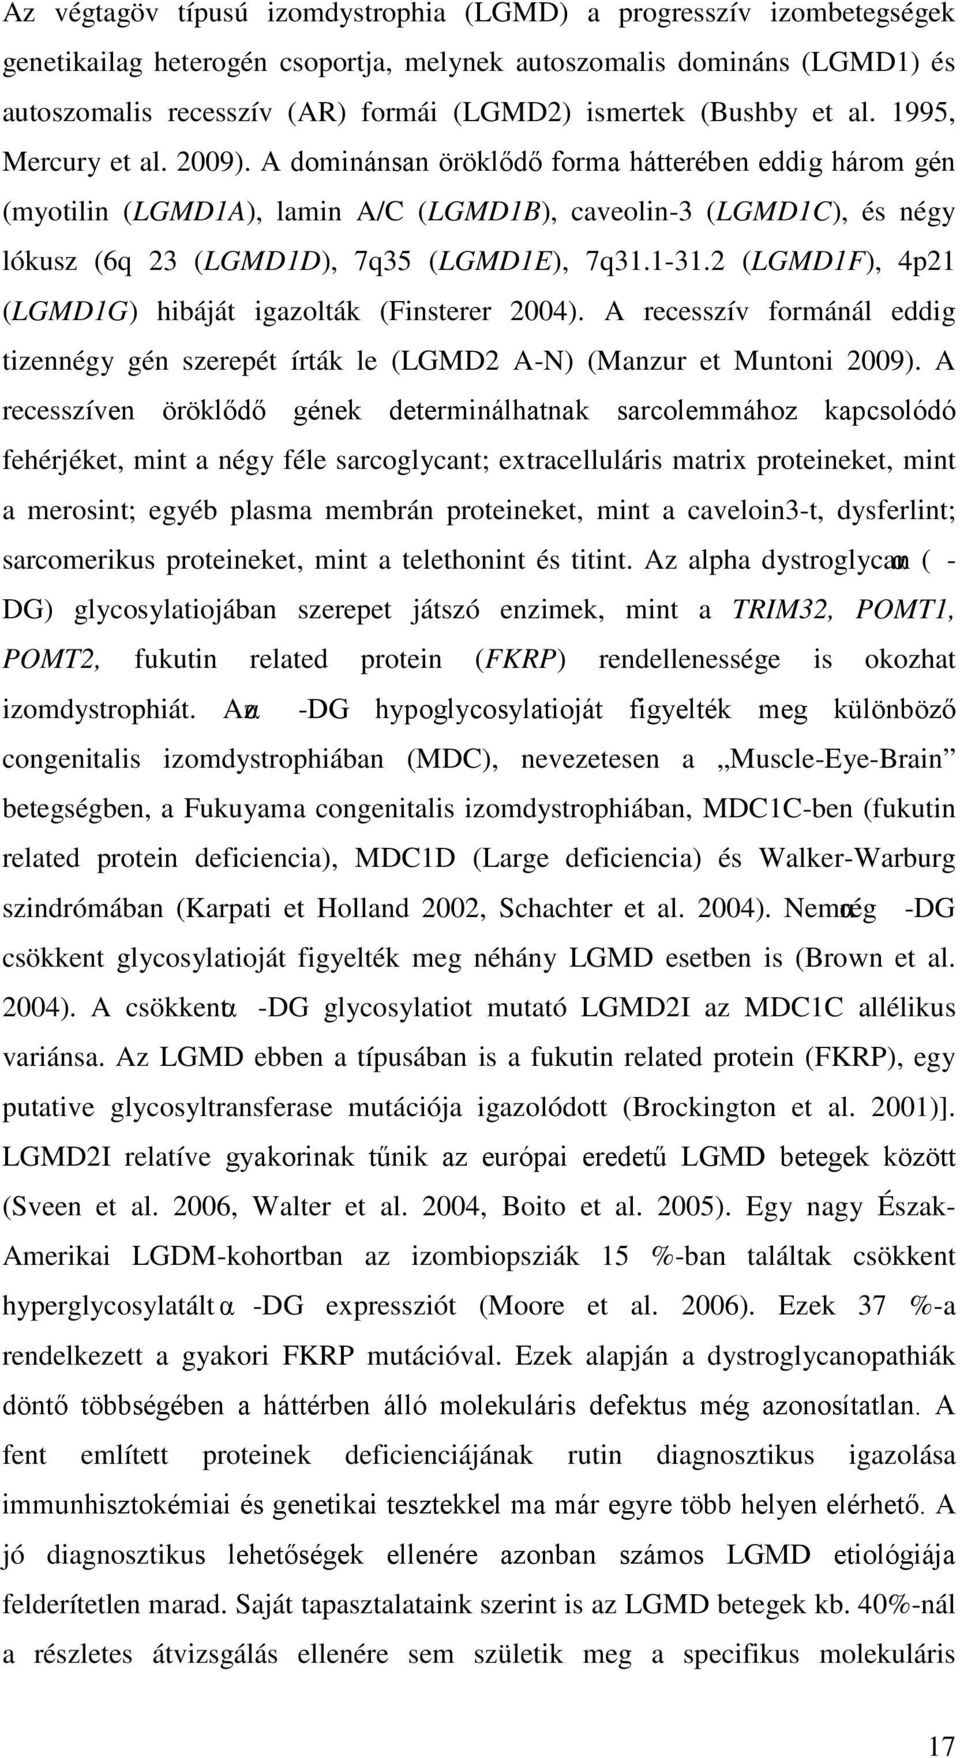 A dominánsan öröklődő forma hátterében eddig három gén (myotilin (LGMD1A), lamin A/C (LGMD1B), caveolin-3 (LGMD1C), és négy lókusz (6q 23 (LGMD1D), 7q35 (LGMD1E), 7q31.1-31.